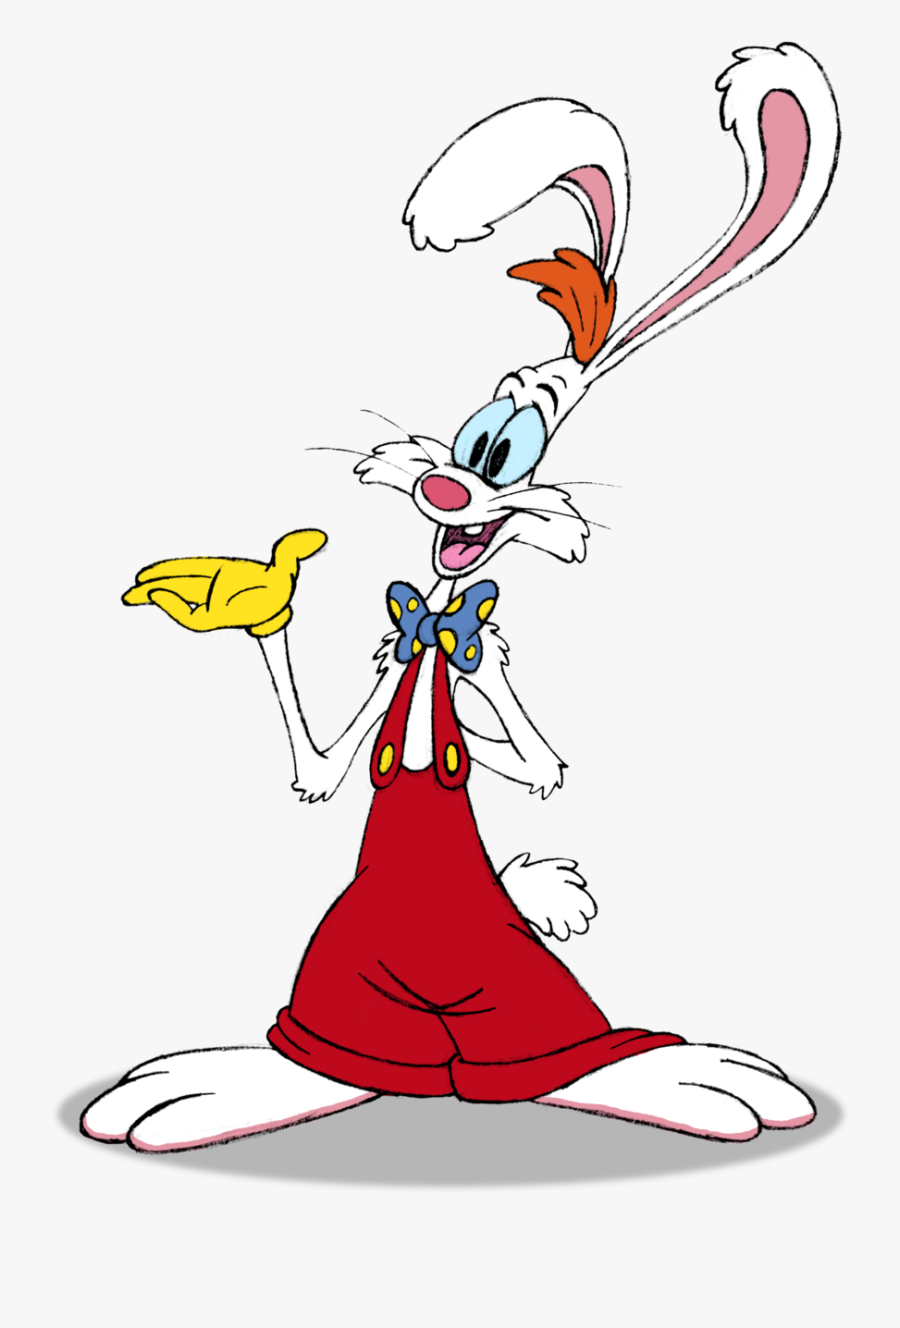 Roger Rabbit Jessica Rabbit Cartoon - Framed Roger Rabbit Png, Transparent Clipart